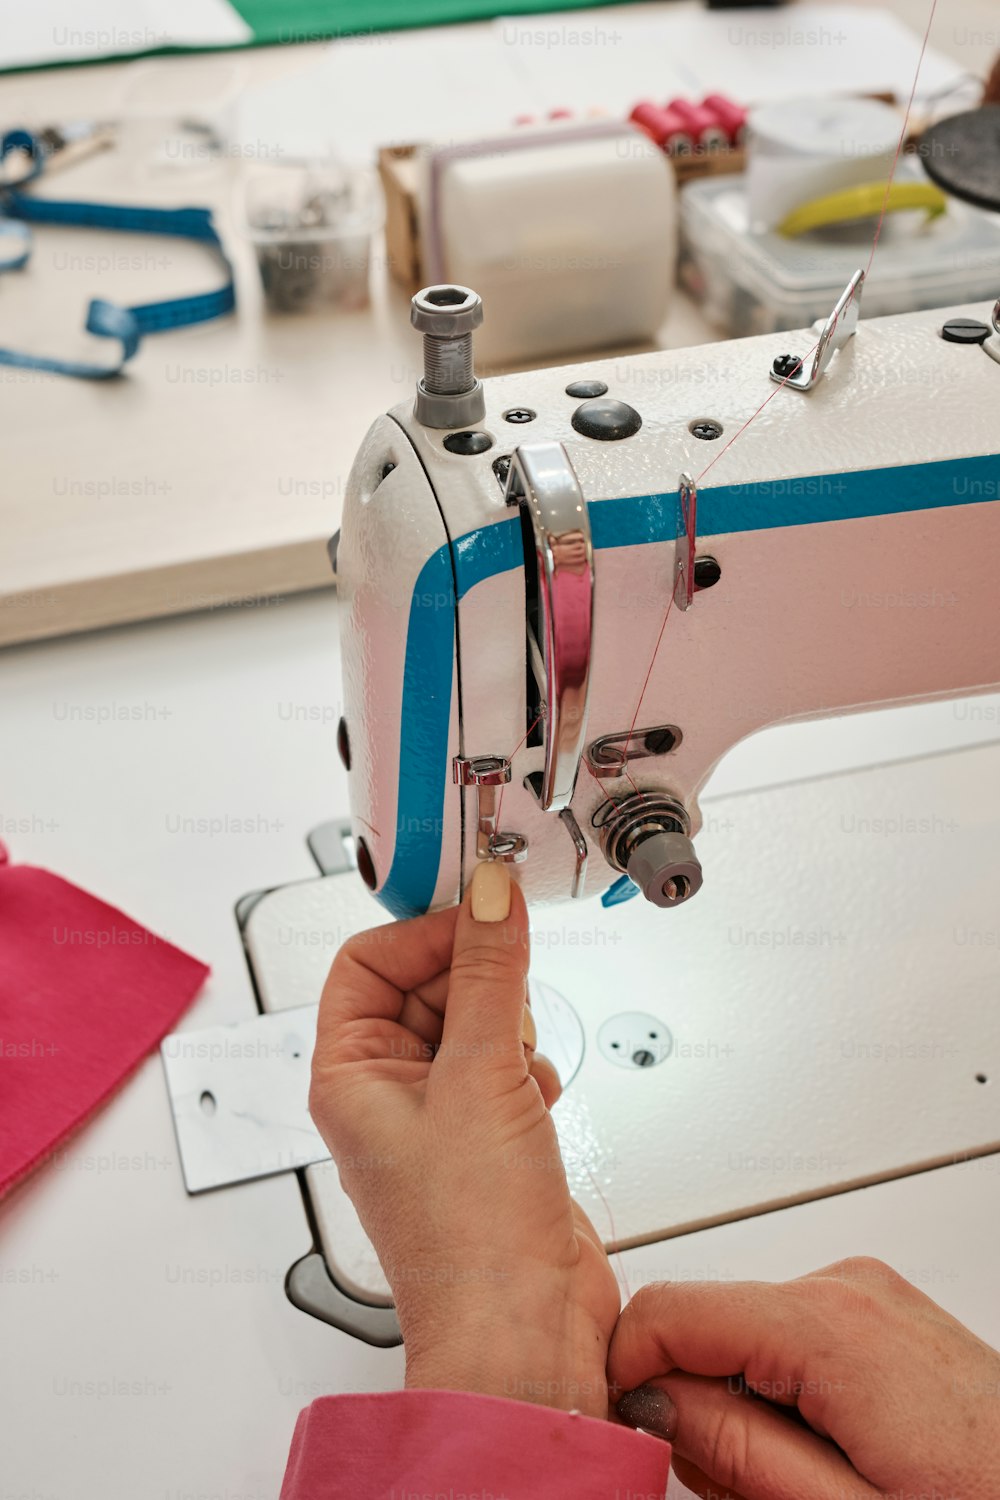 Una persona que usa una máquina de coser para coser un trozo de tela